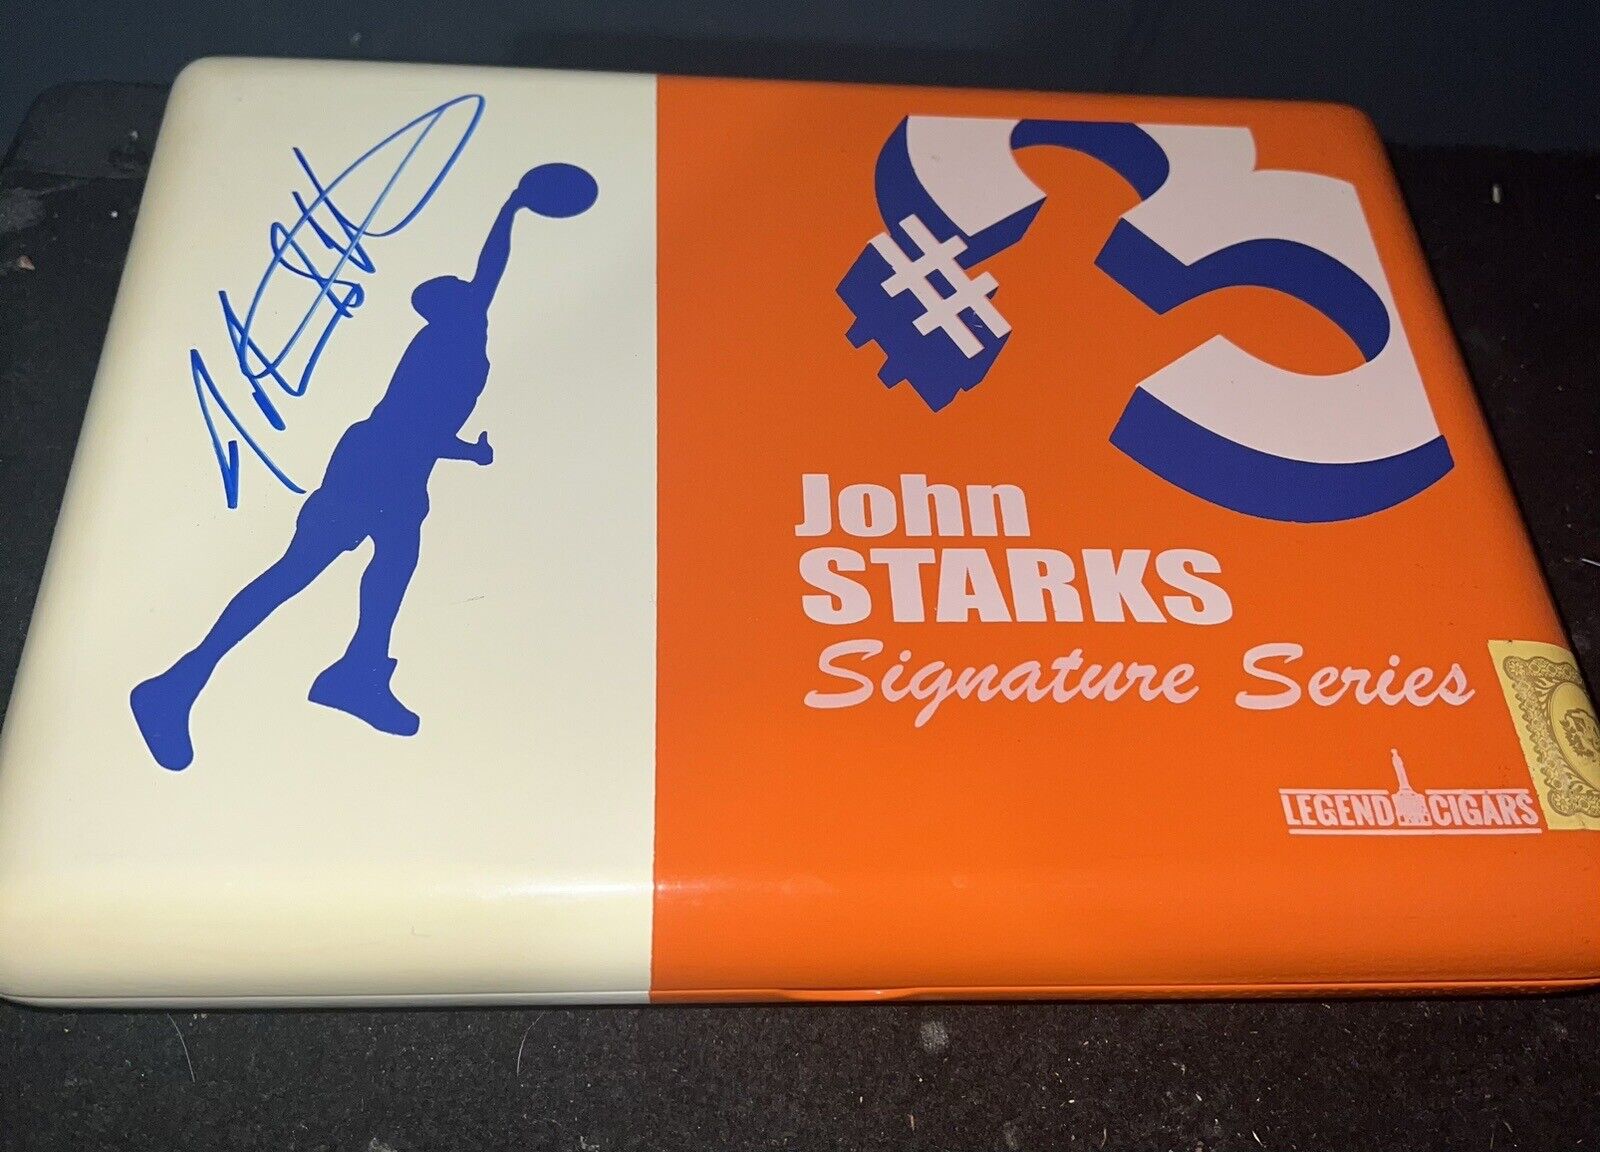 John Starks #3 Signature Series Legend Signed Cigar Box Empty NY Knicks